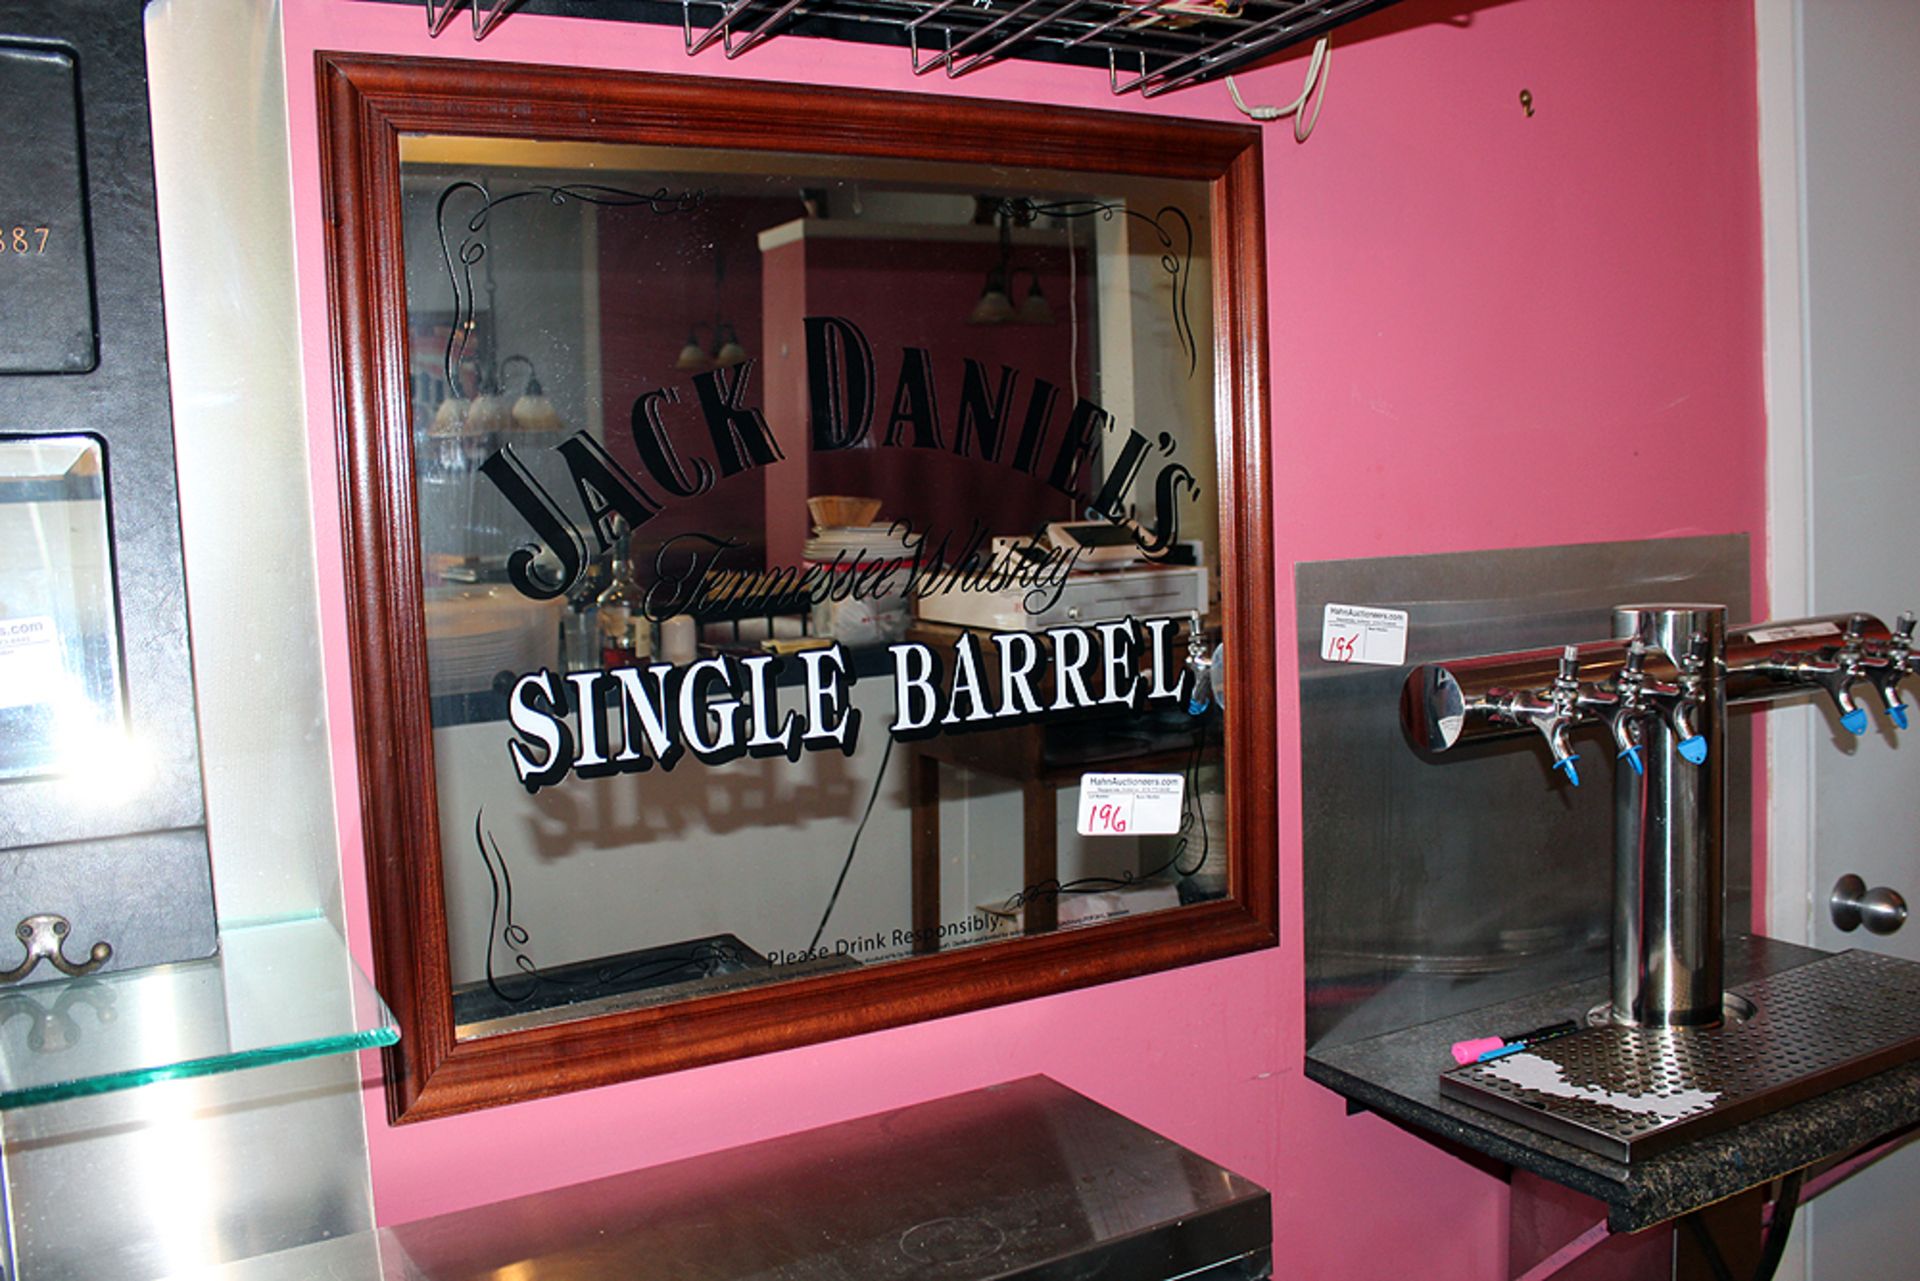 30x28 Jack Daniels mirrored sign